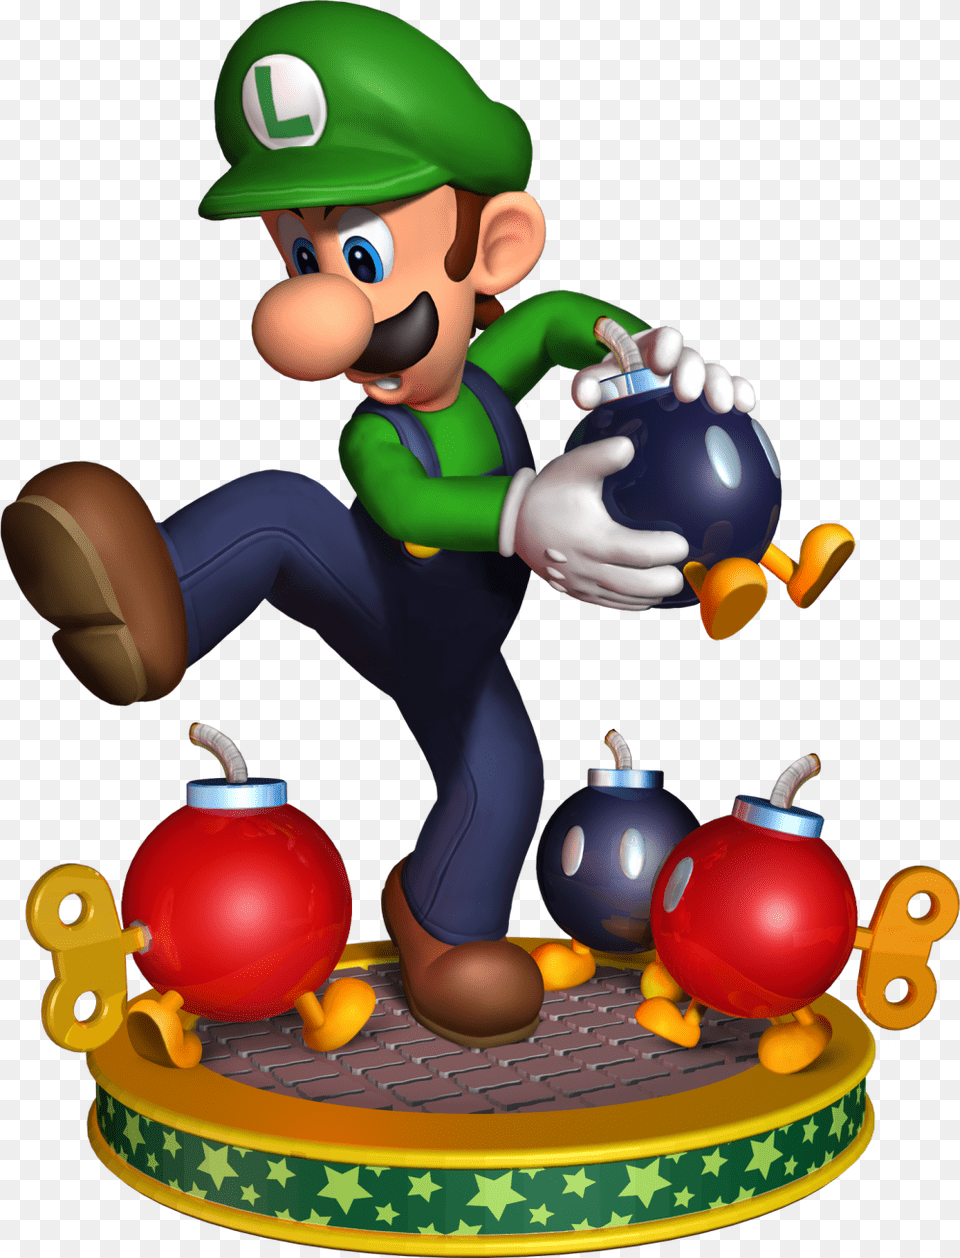 Mario Party 5 Mario, Baby, Person, Clothing, Glove Png Image